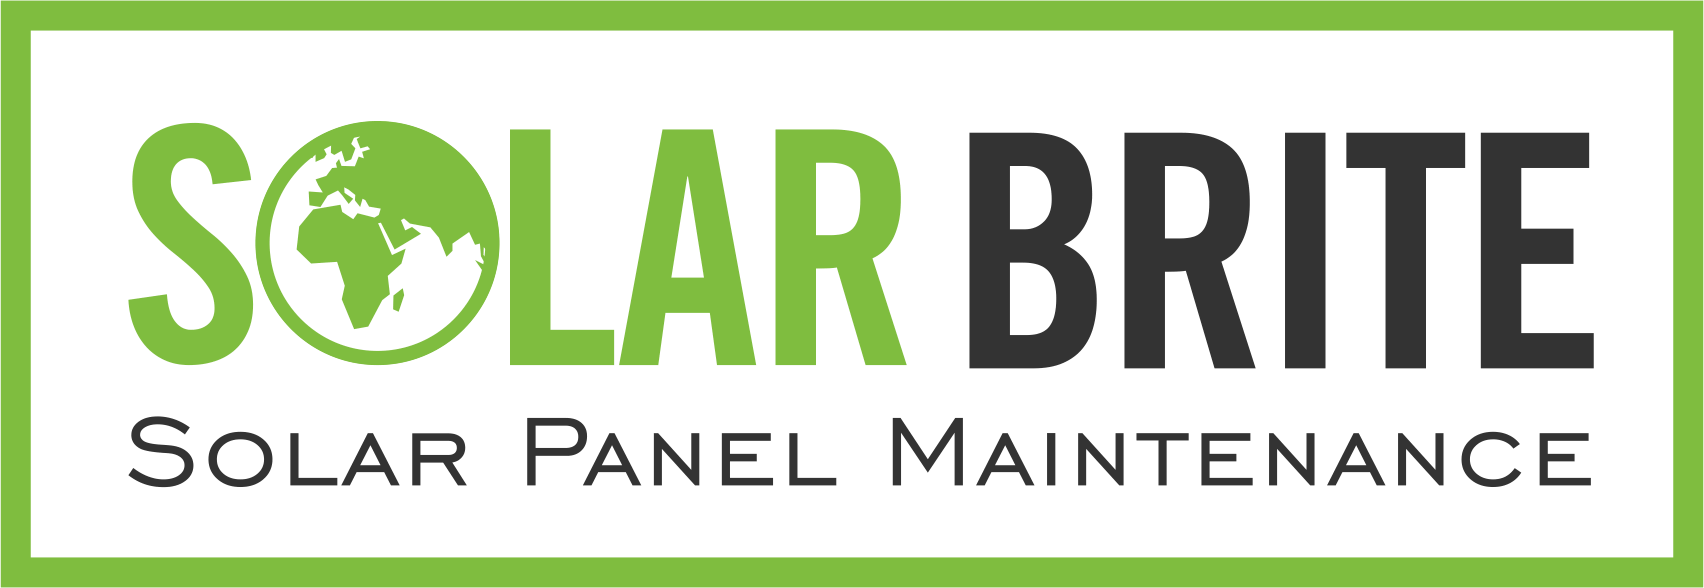 Brite Logo - Solar Brite. Solar Panel Cleaning & Maintenance